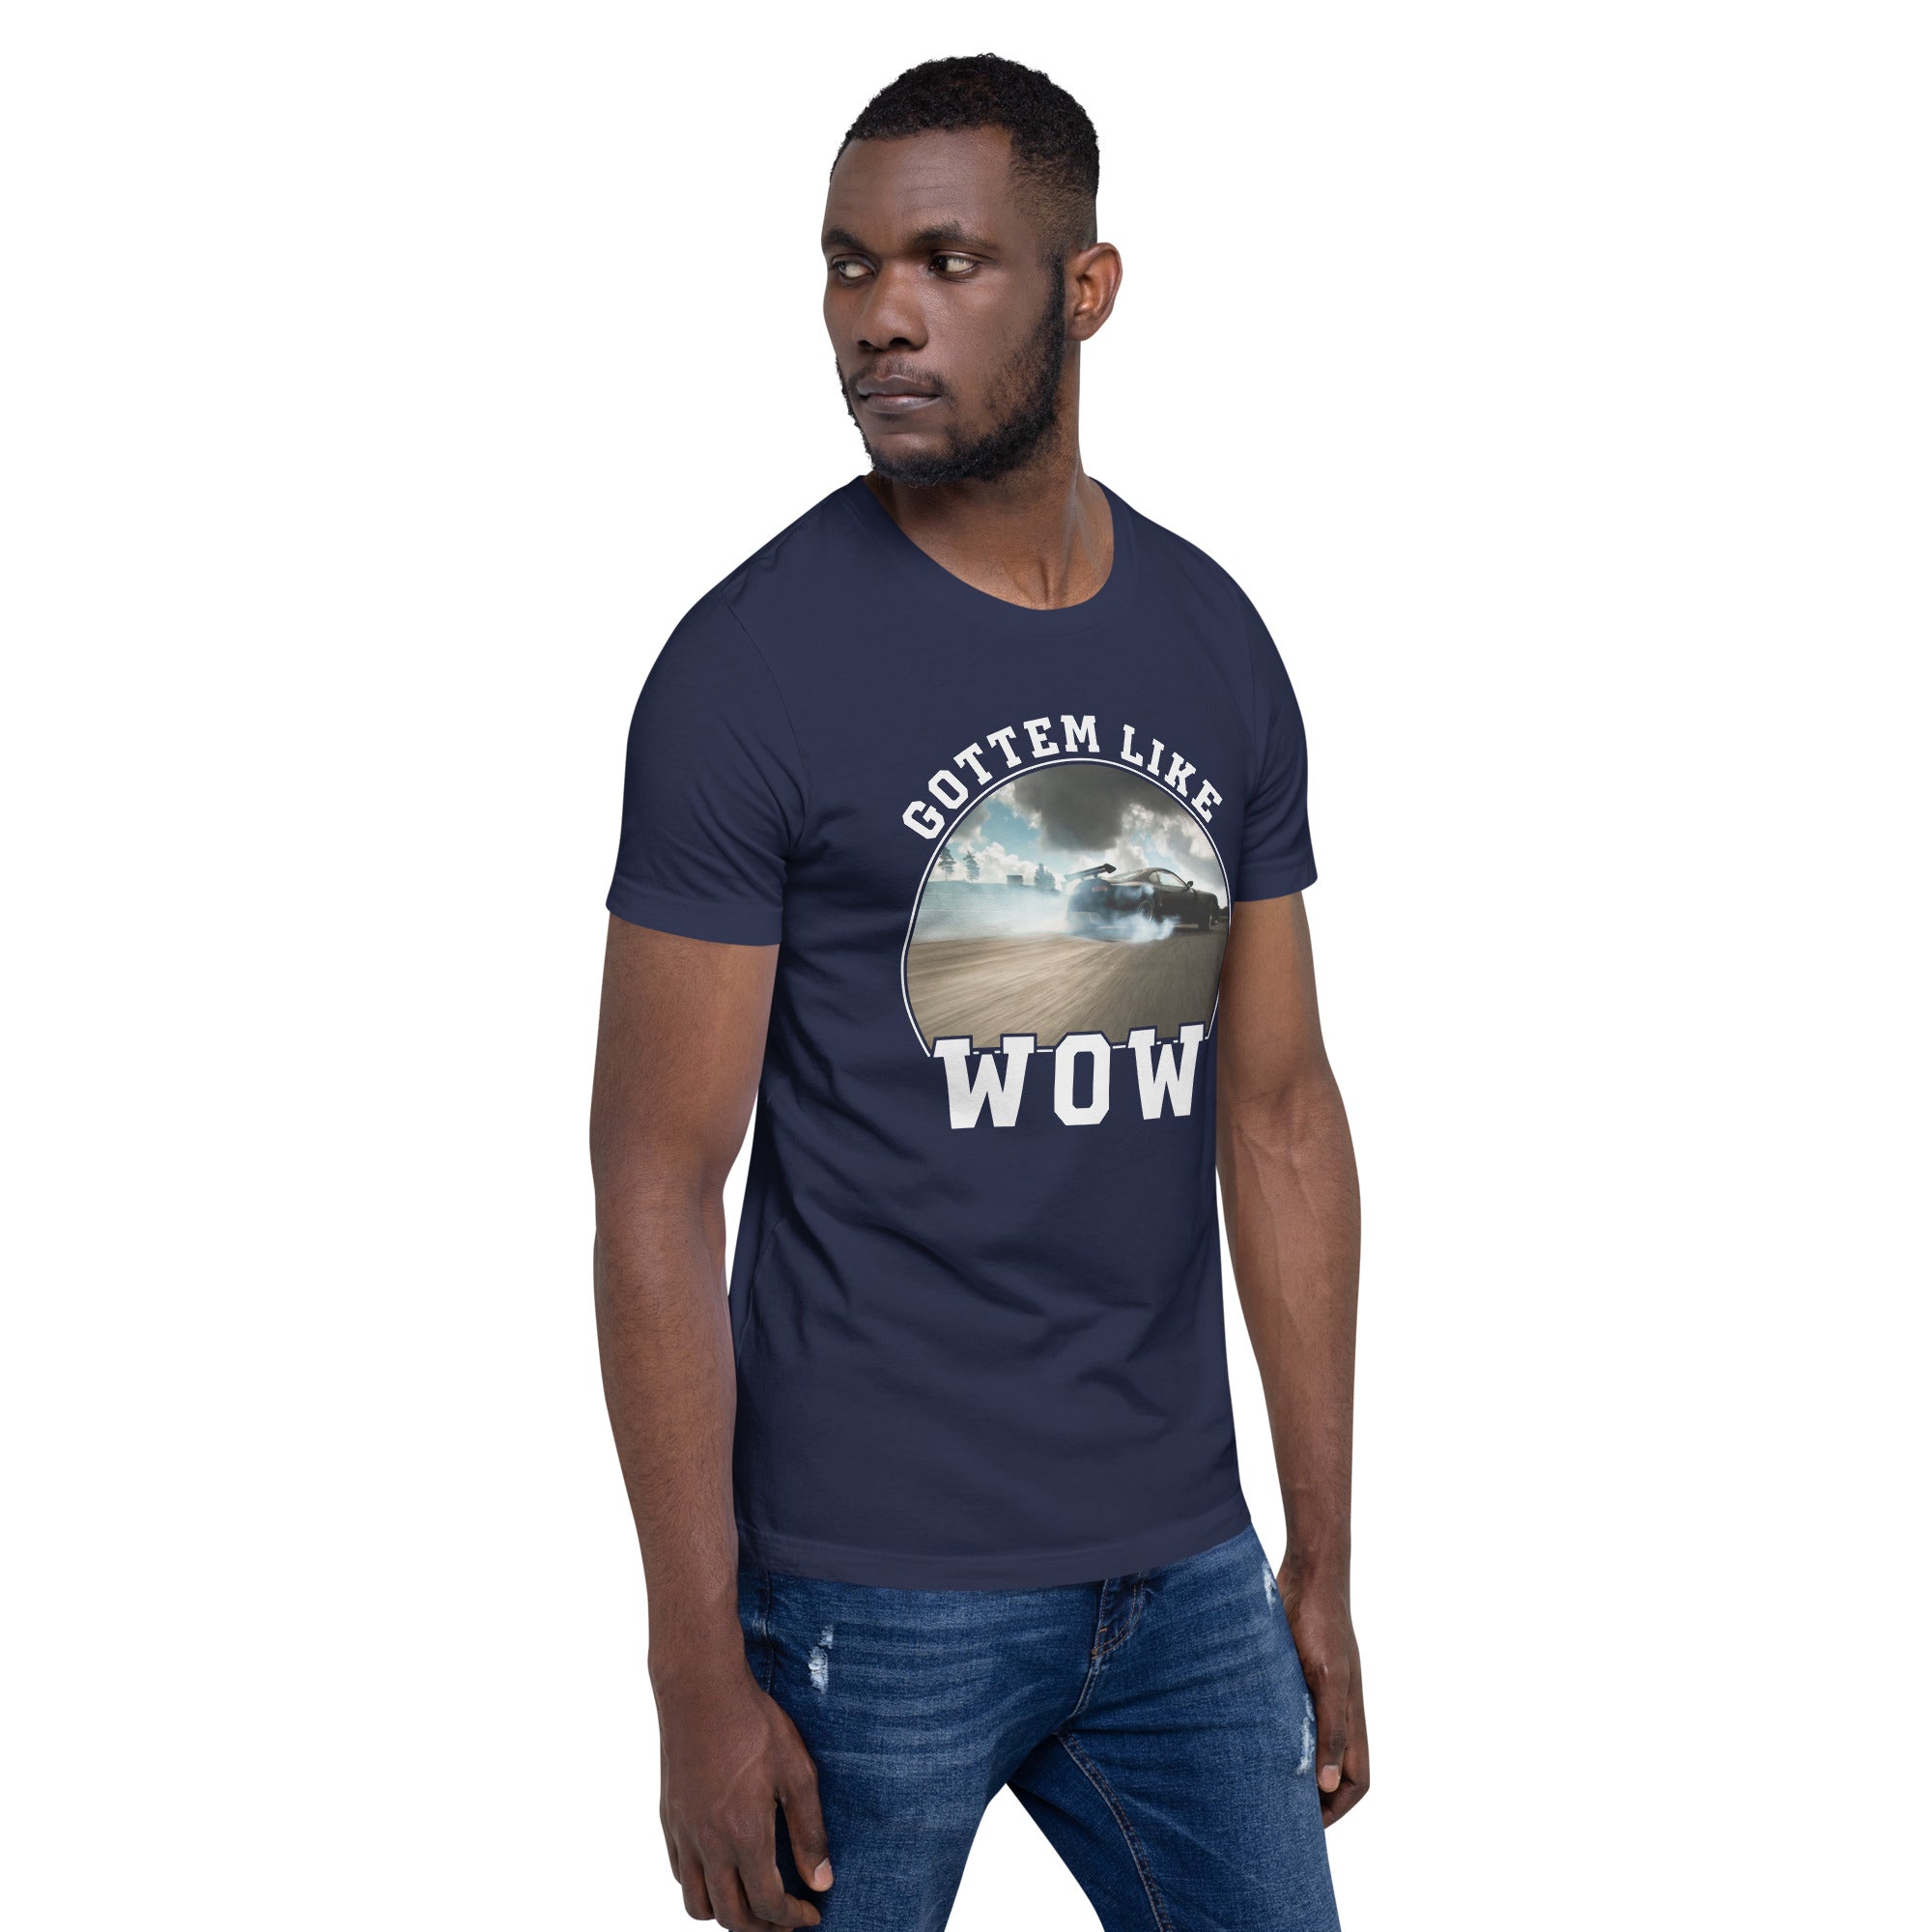 "Gottem Like wow" Motogeniks Unisex t-shirt